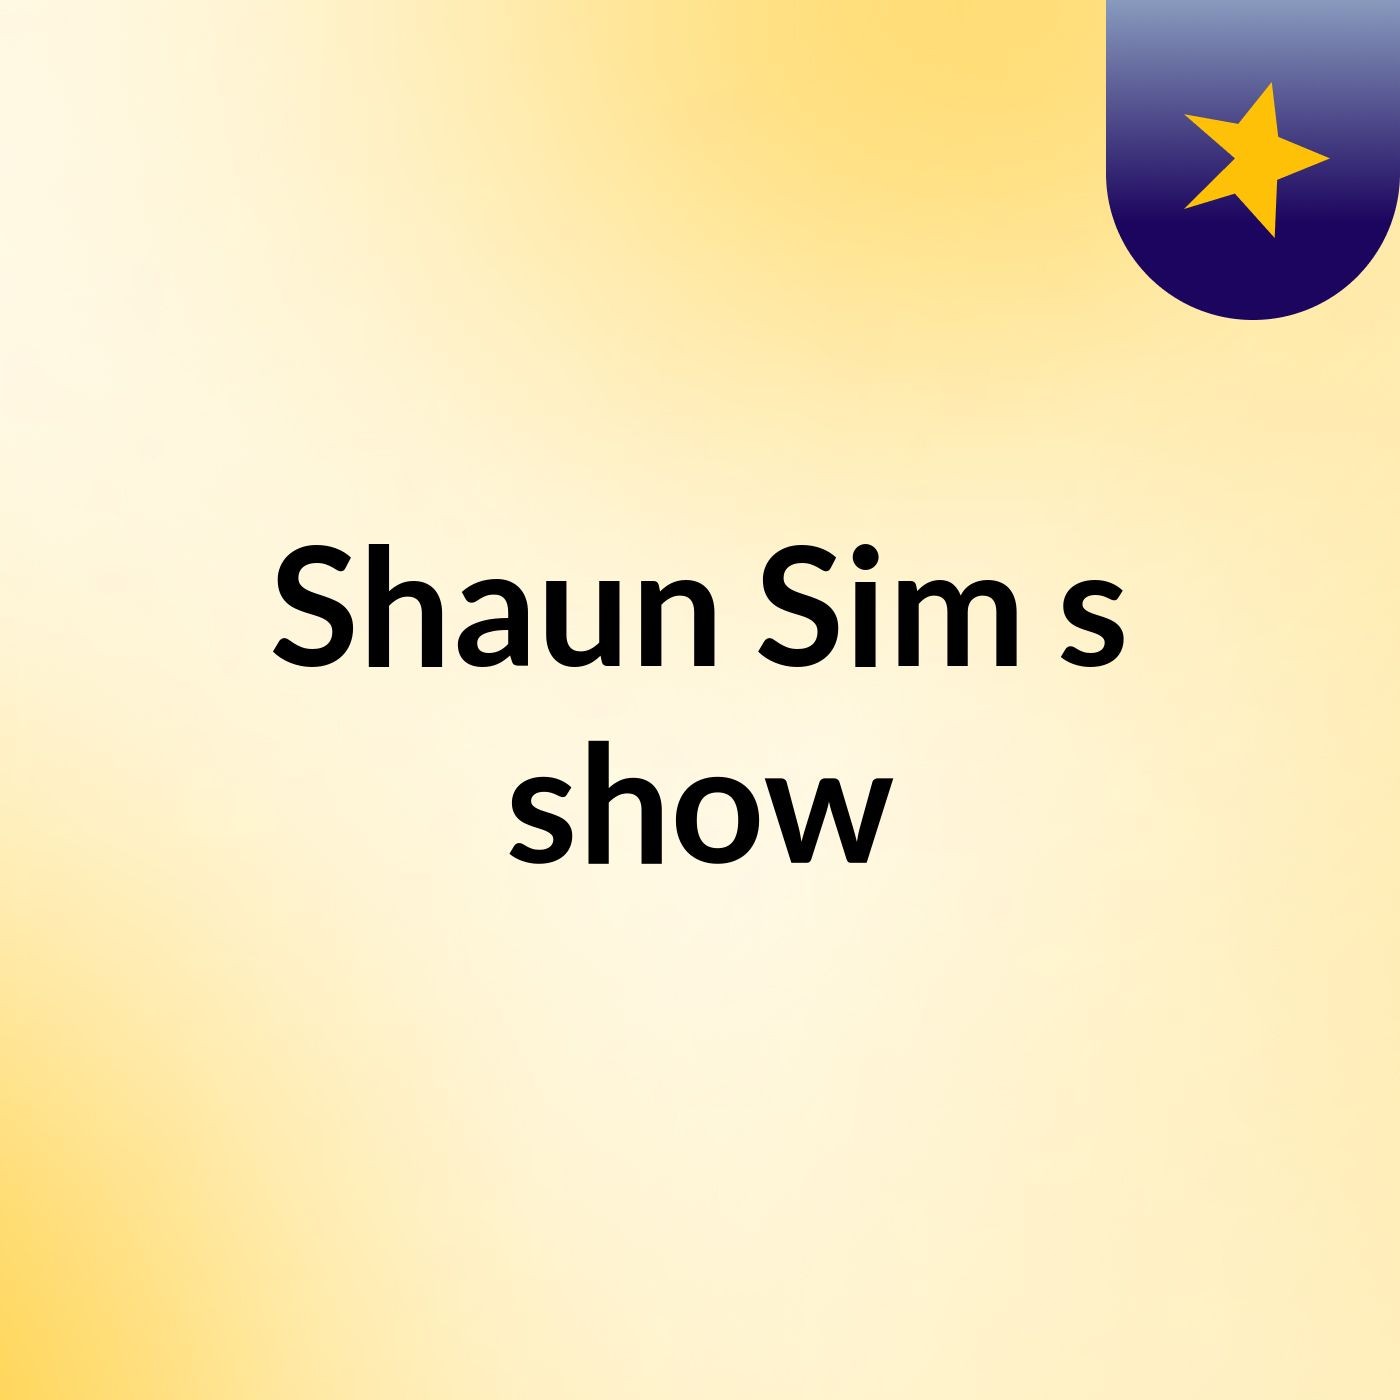 Shaun Sim's show